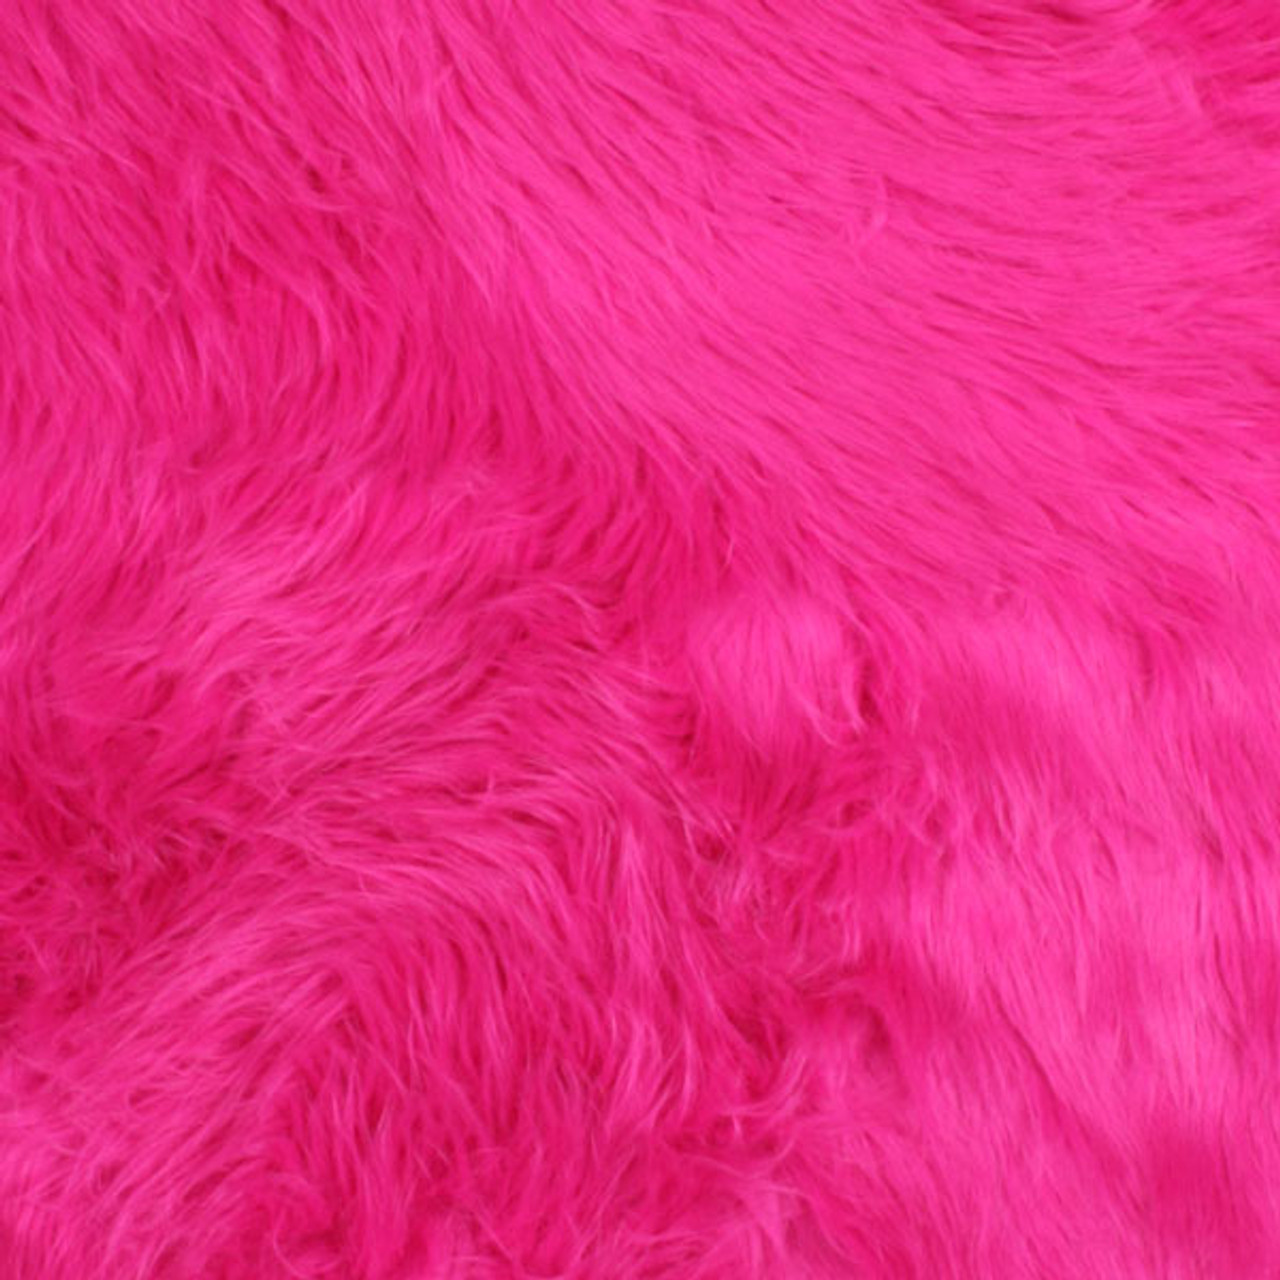 Hot Pink Shag Faux Fur